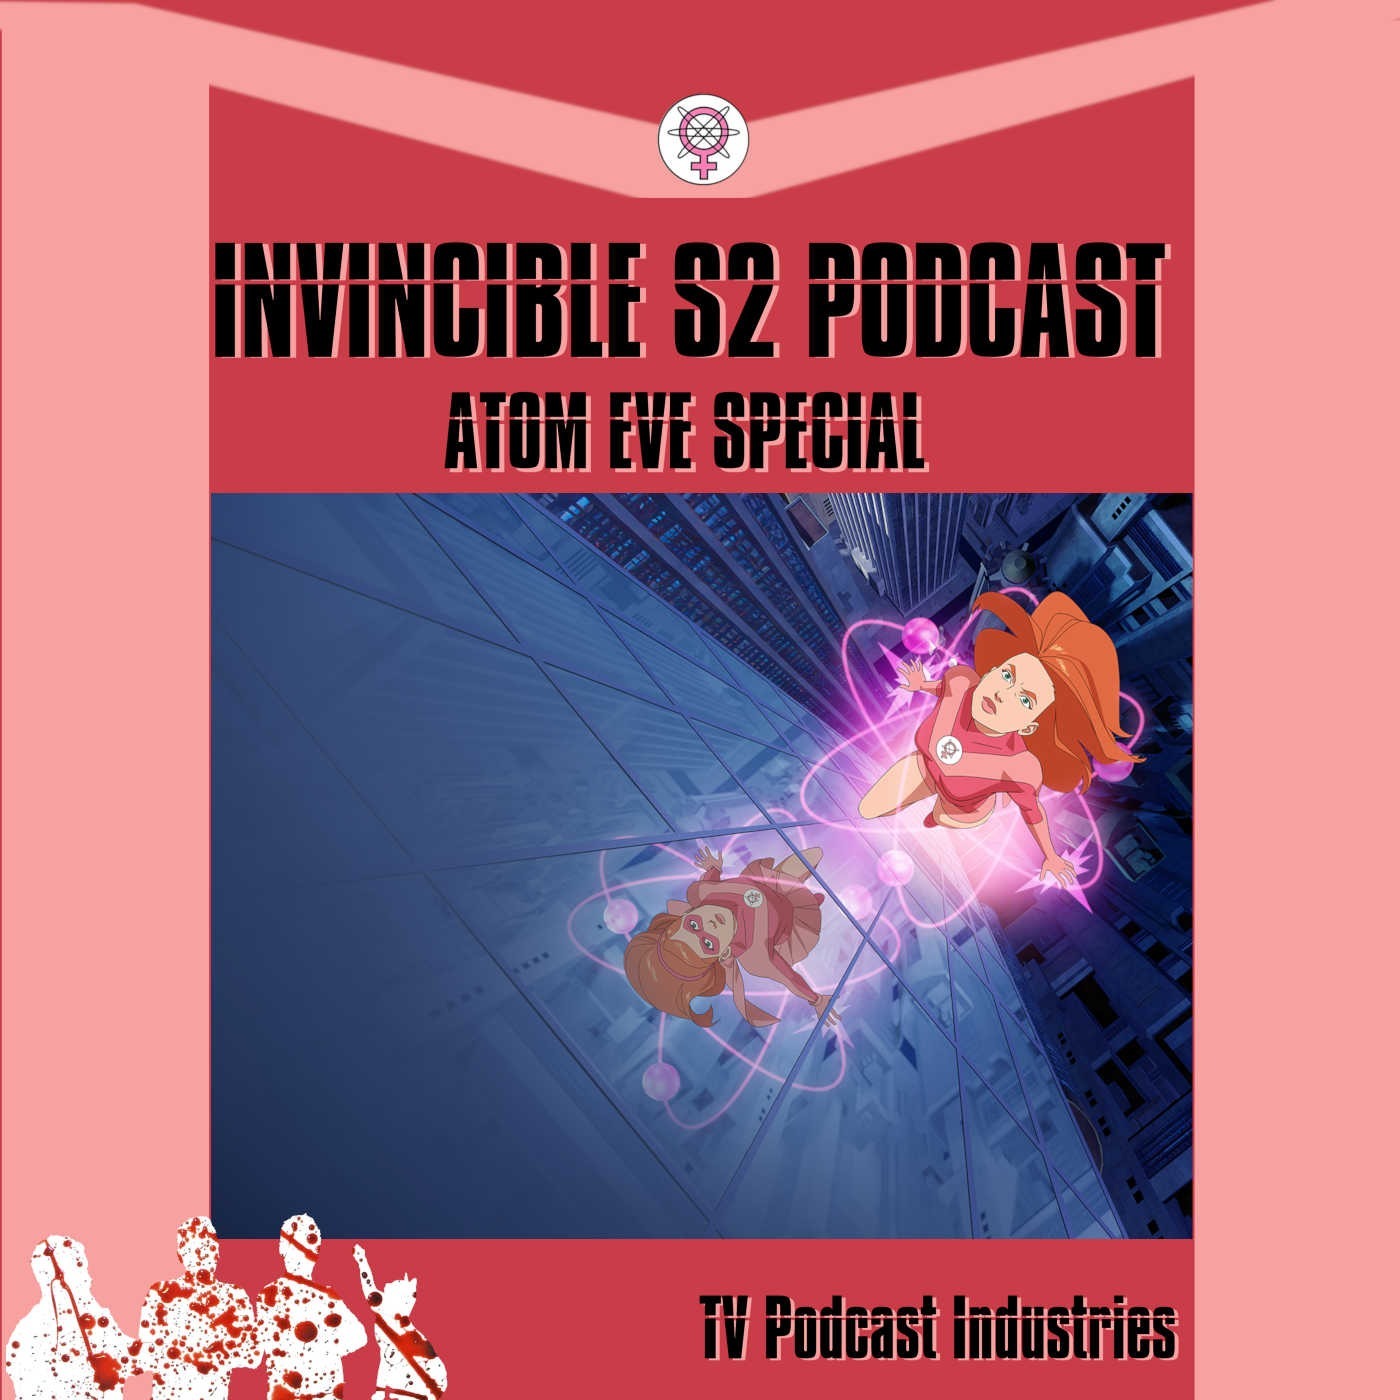 Invincible's Robert Kirkman on Season 2, the Atom Eve Ep, and